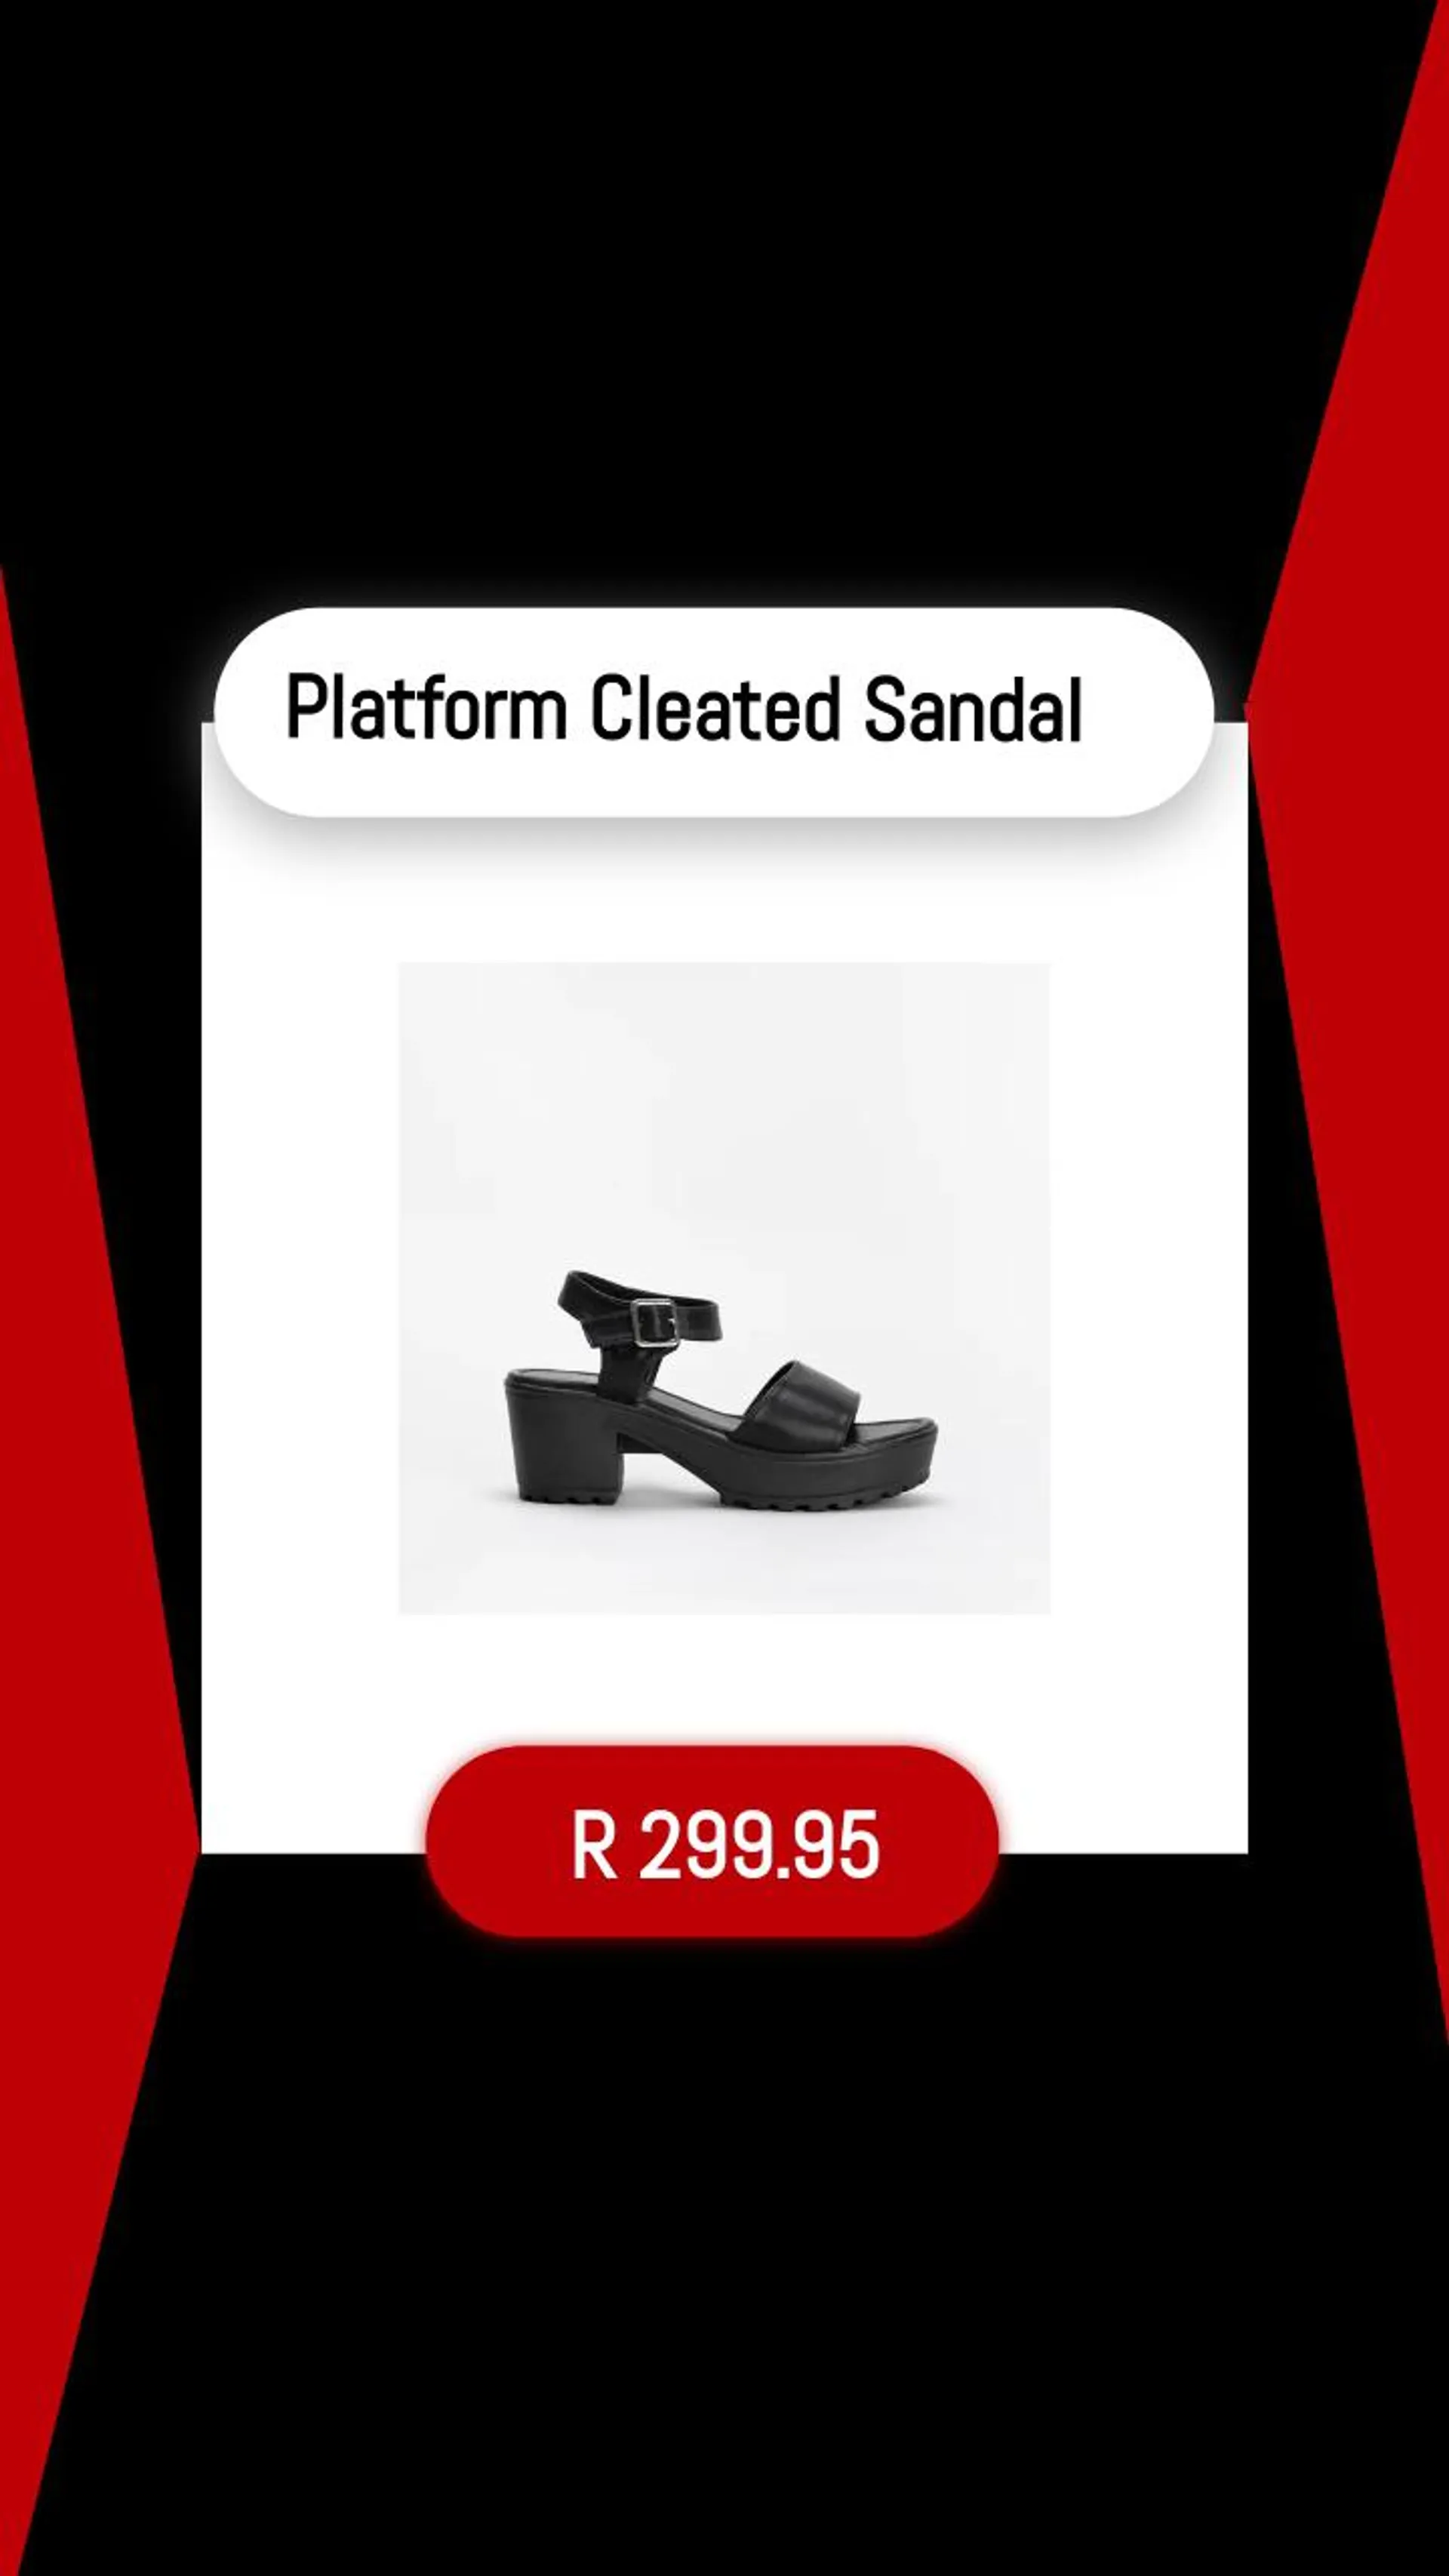 Platform Cleated Sandal